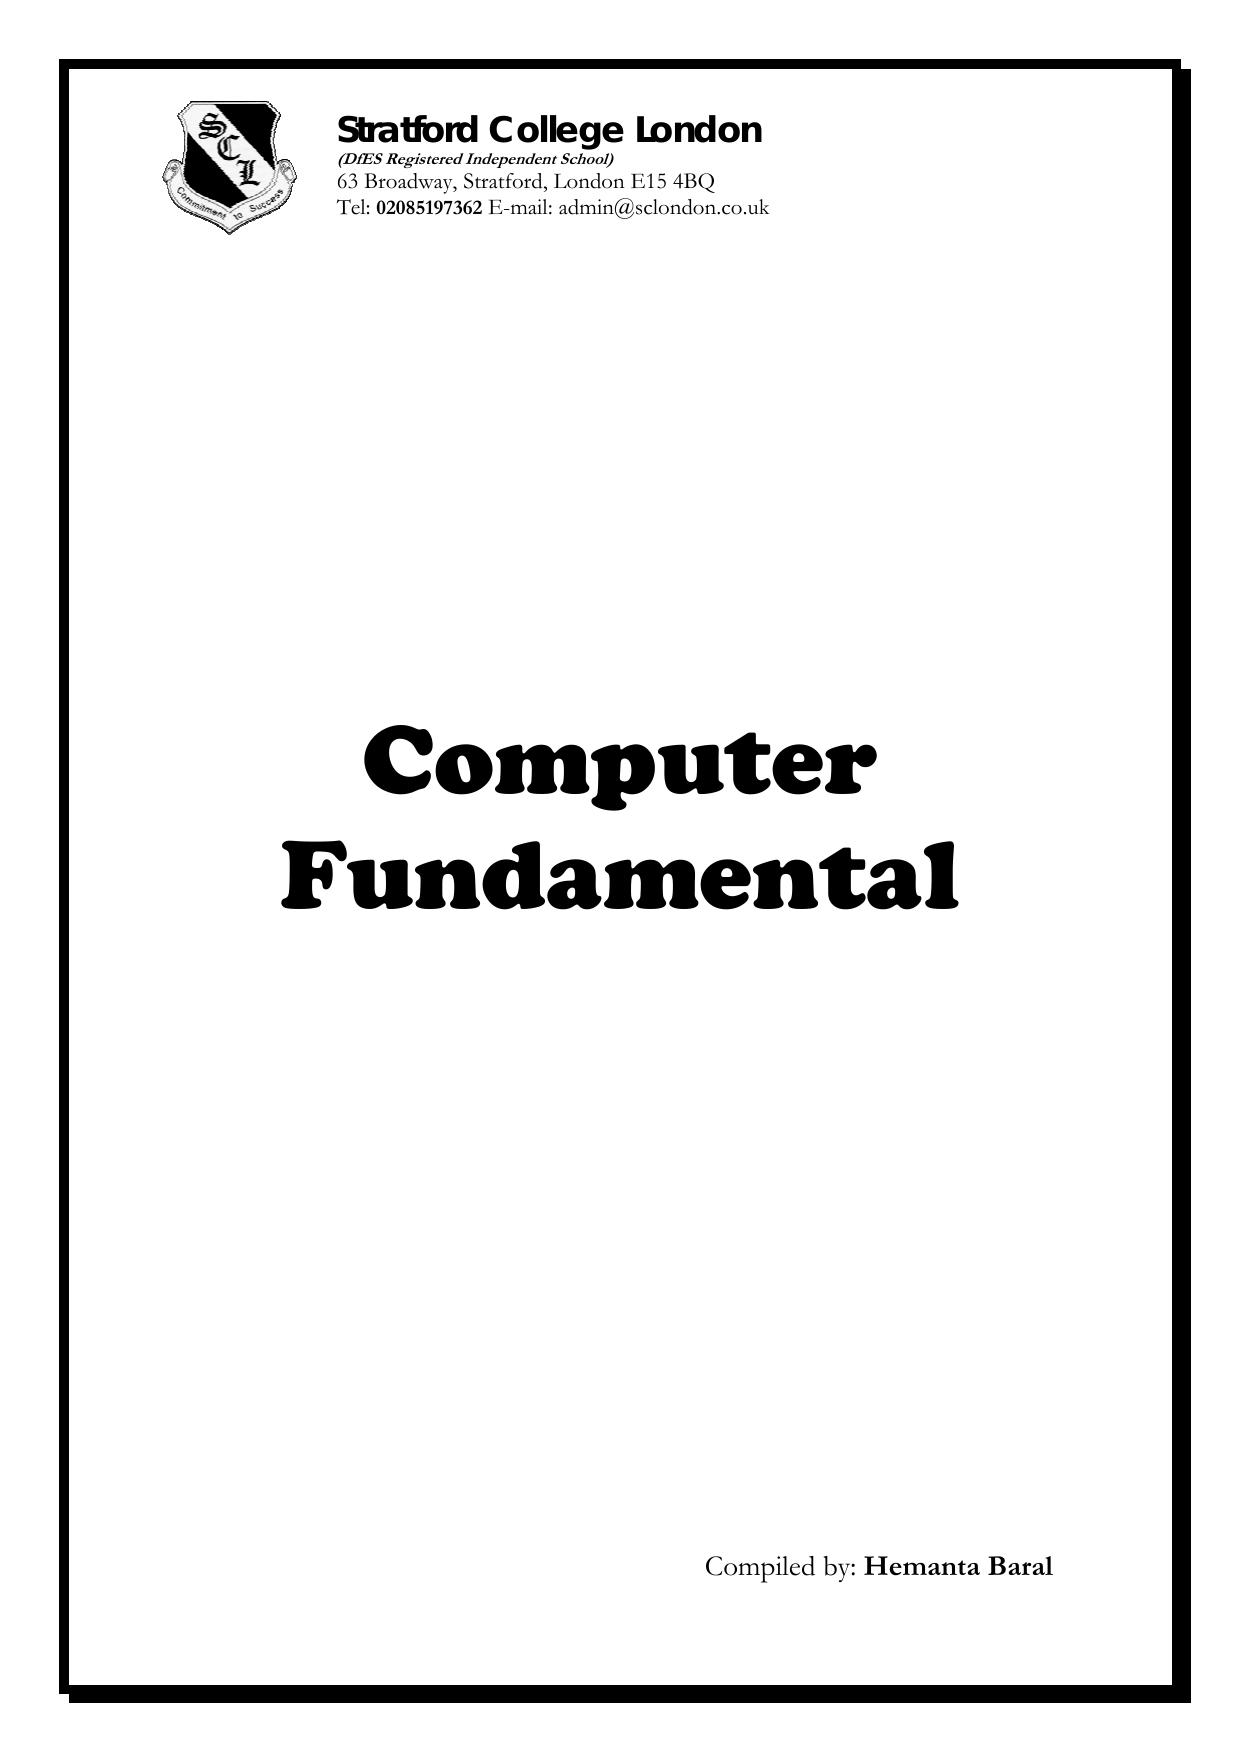 Microsoft Word - Computer Fundamental